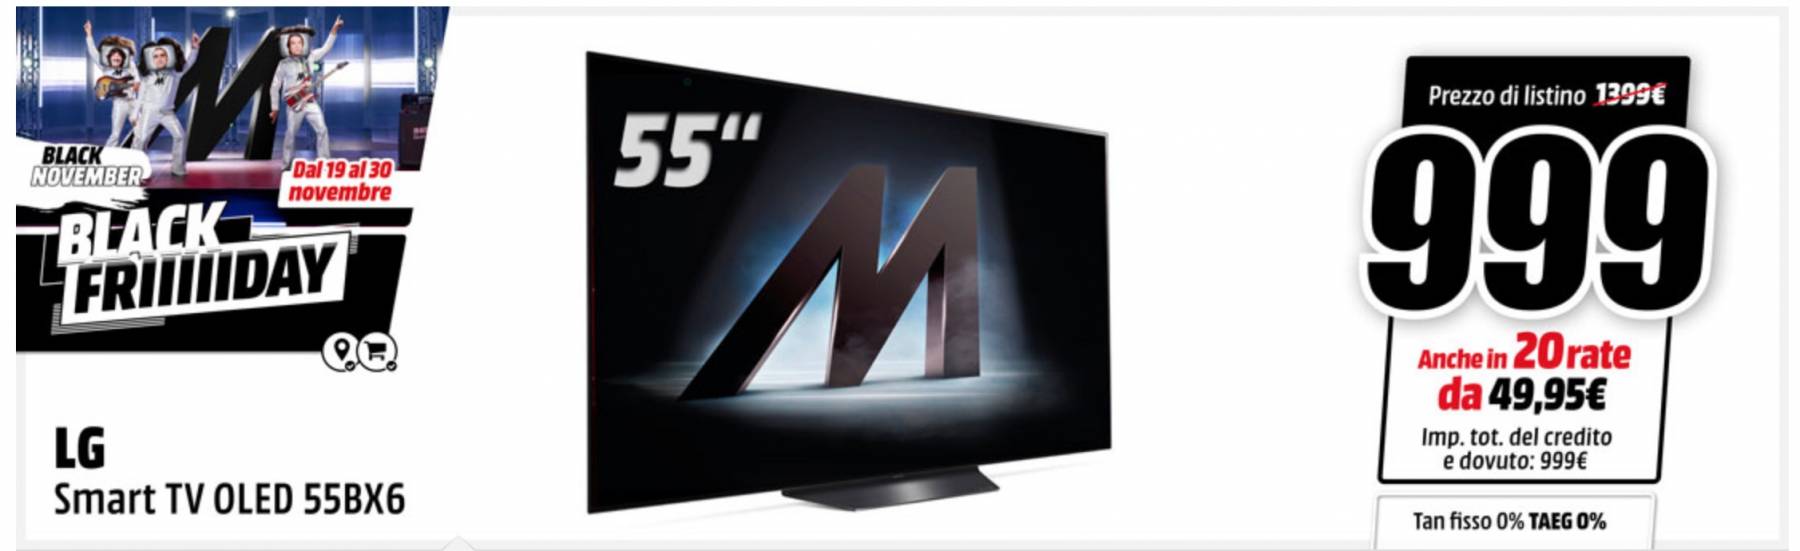 LG OLED 55BX6 Smart TV MediaWorld Black Friday 2020